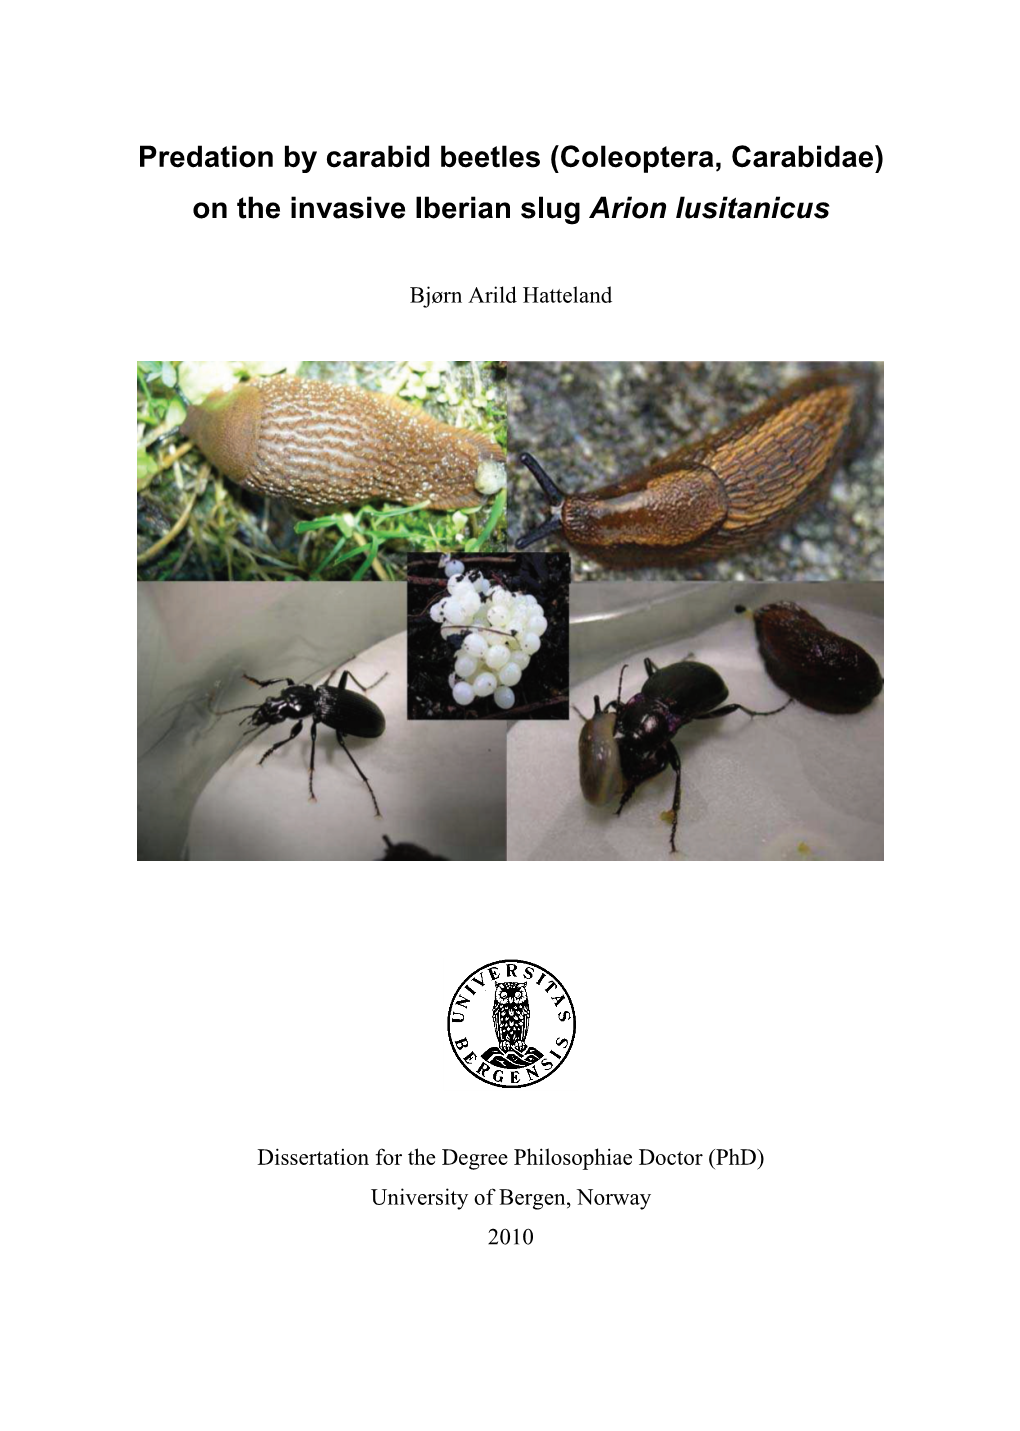 (Coleoptera, Carabidae) on the Invasive Iberian Slug Arion Lusitanicus